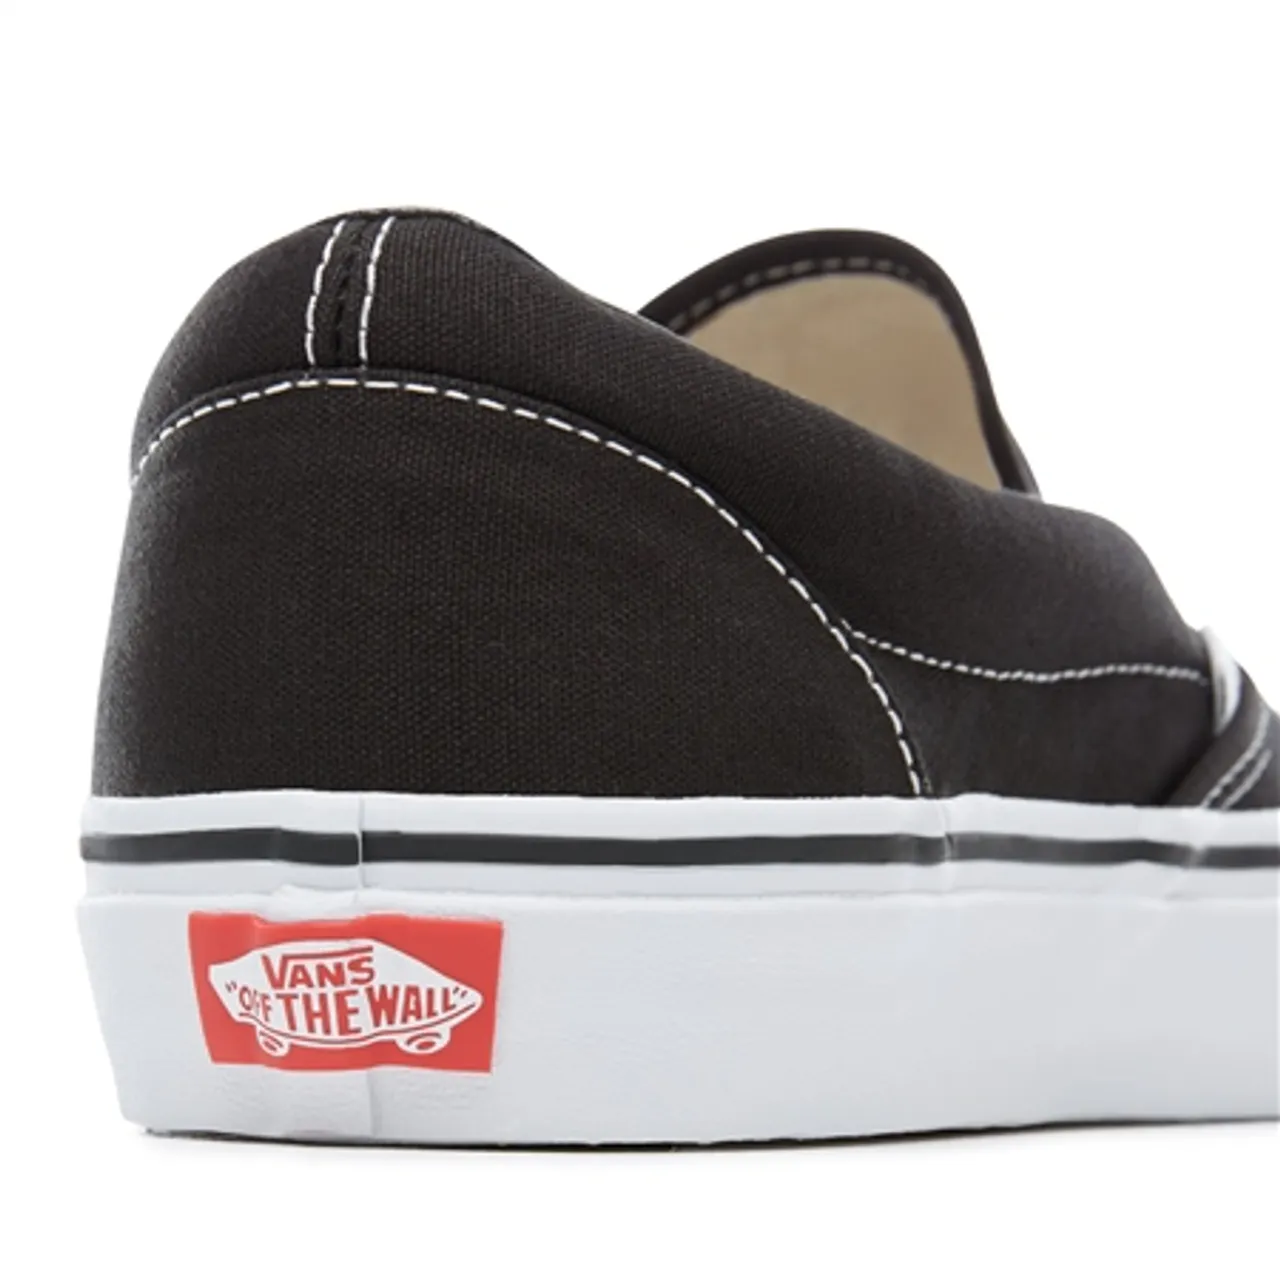 Vans Womens Classic Slip-On Shoes - Black - UK 4 (EU 36.5)